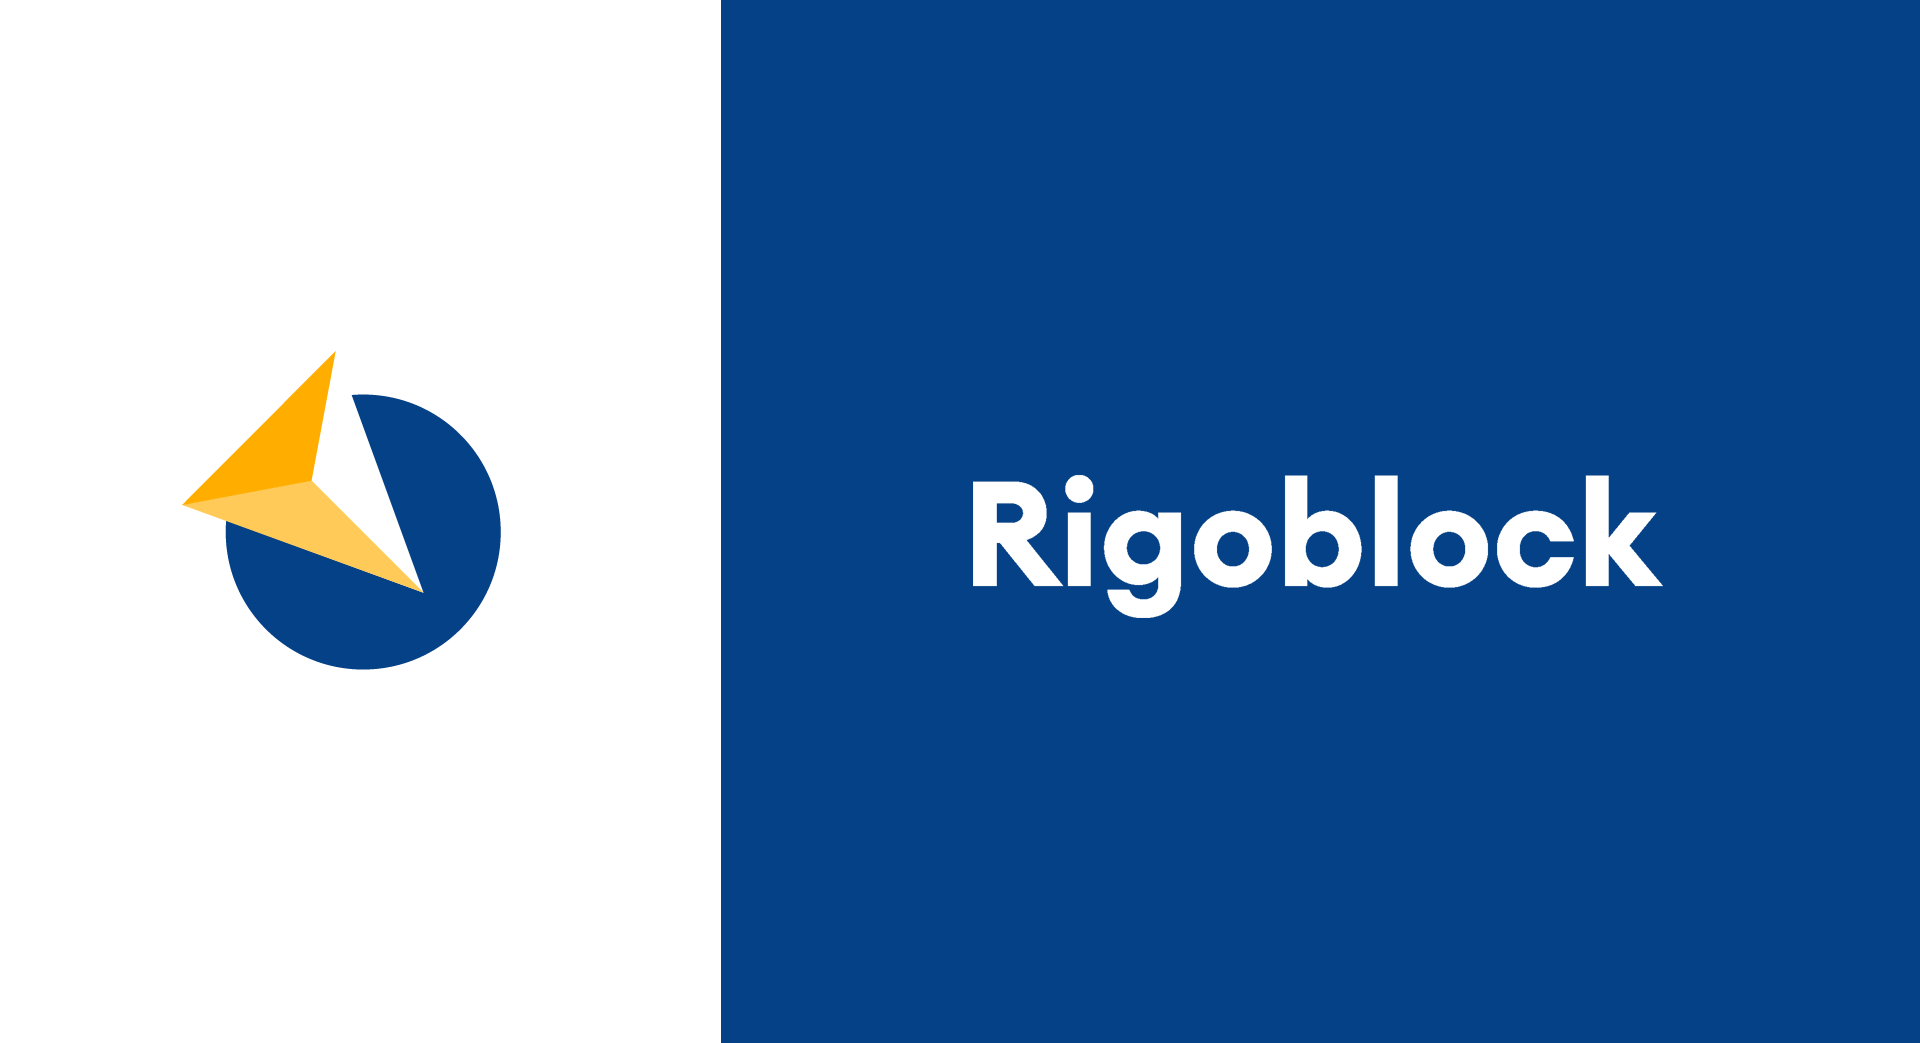 RigoBlock